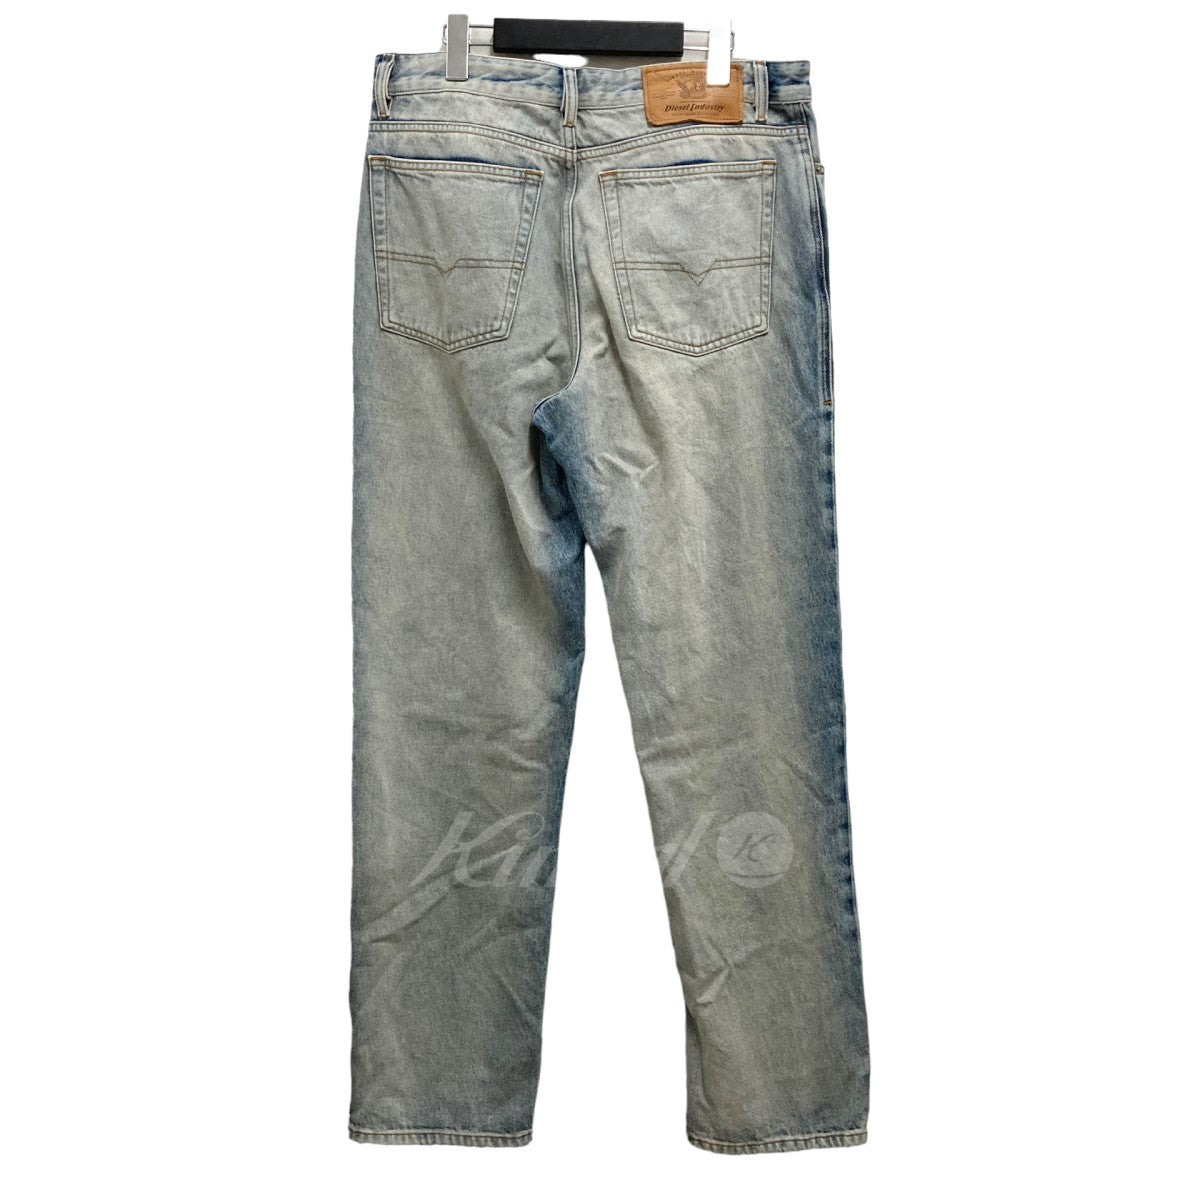 DIESEL(ディーゼル) 1955 D-Rekiv 09c89 Straight Jeans デニムパンツ